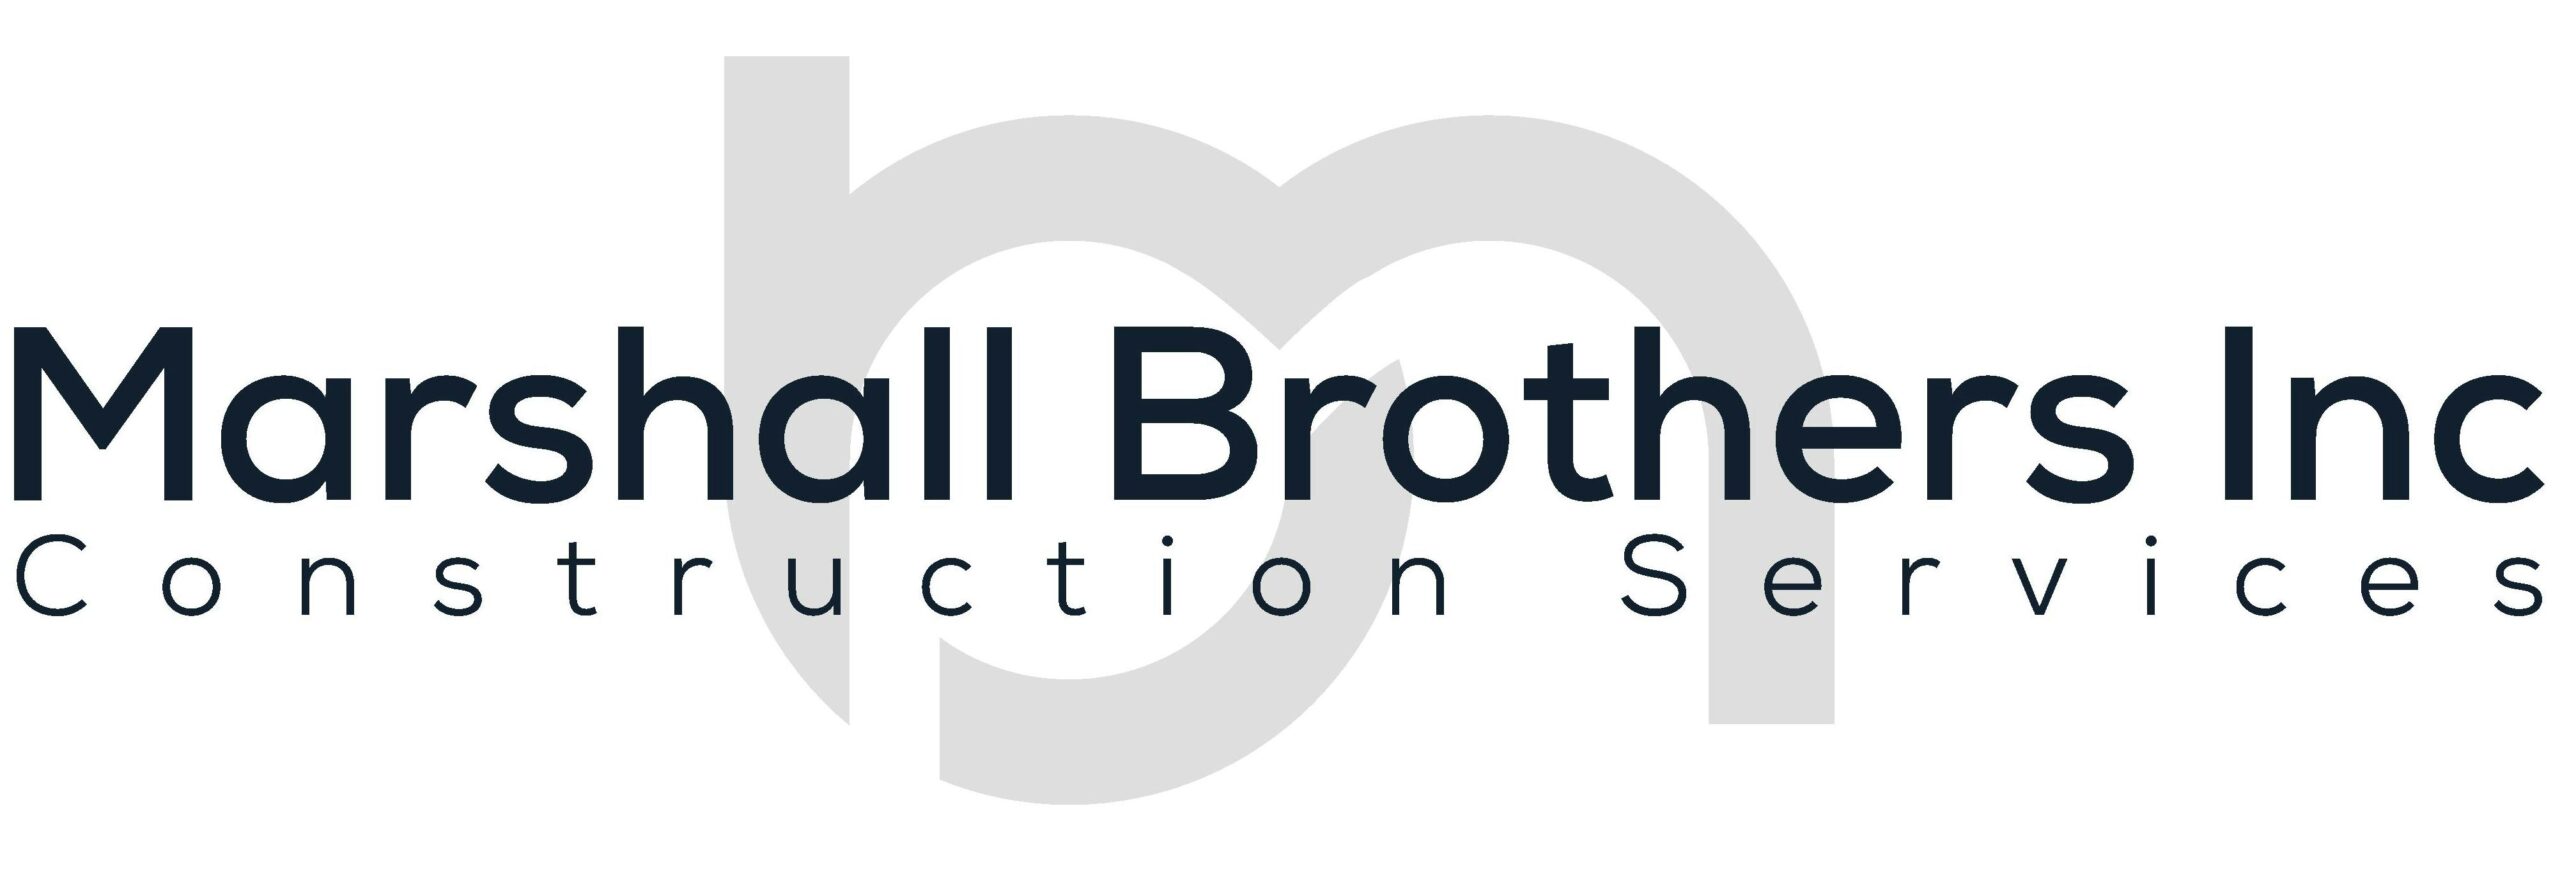 Marshall-Brothers-Inc-Logo-JPG